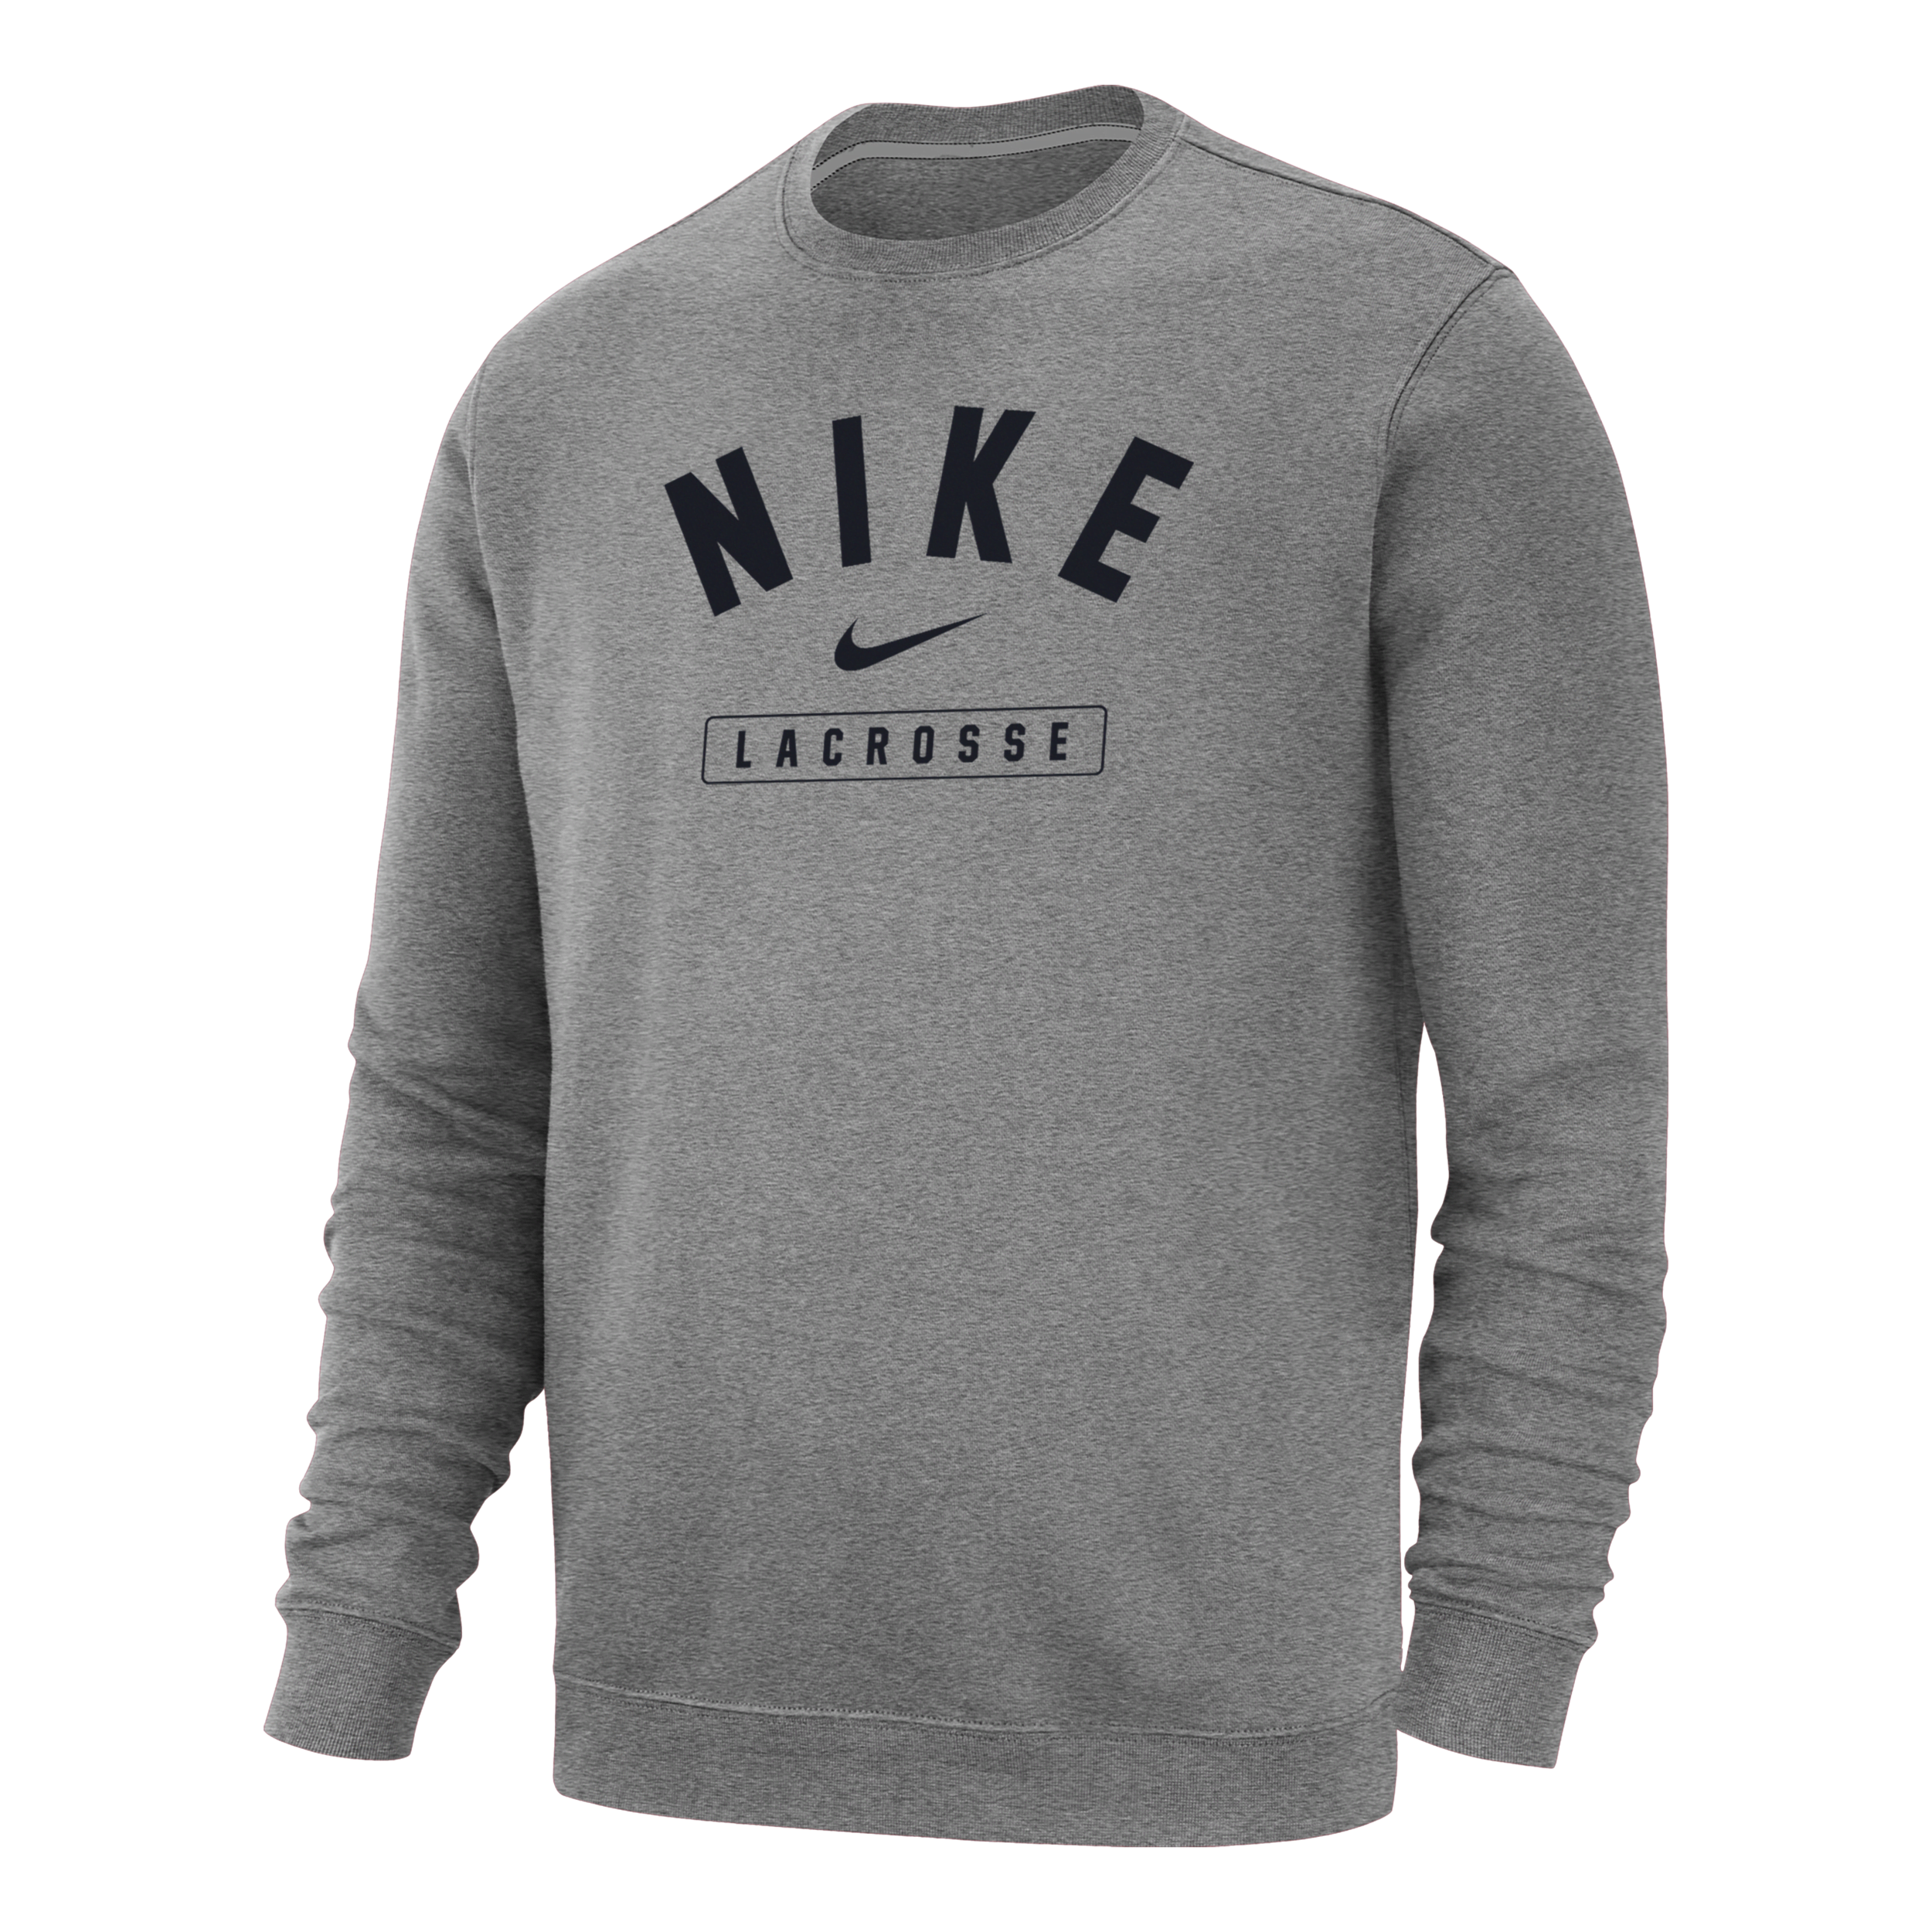 Nike Men's Lacrosse Crew-neck Sweatshirt In Grey